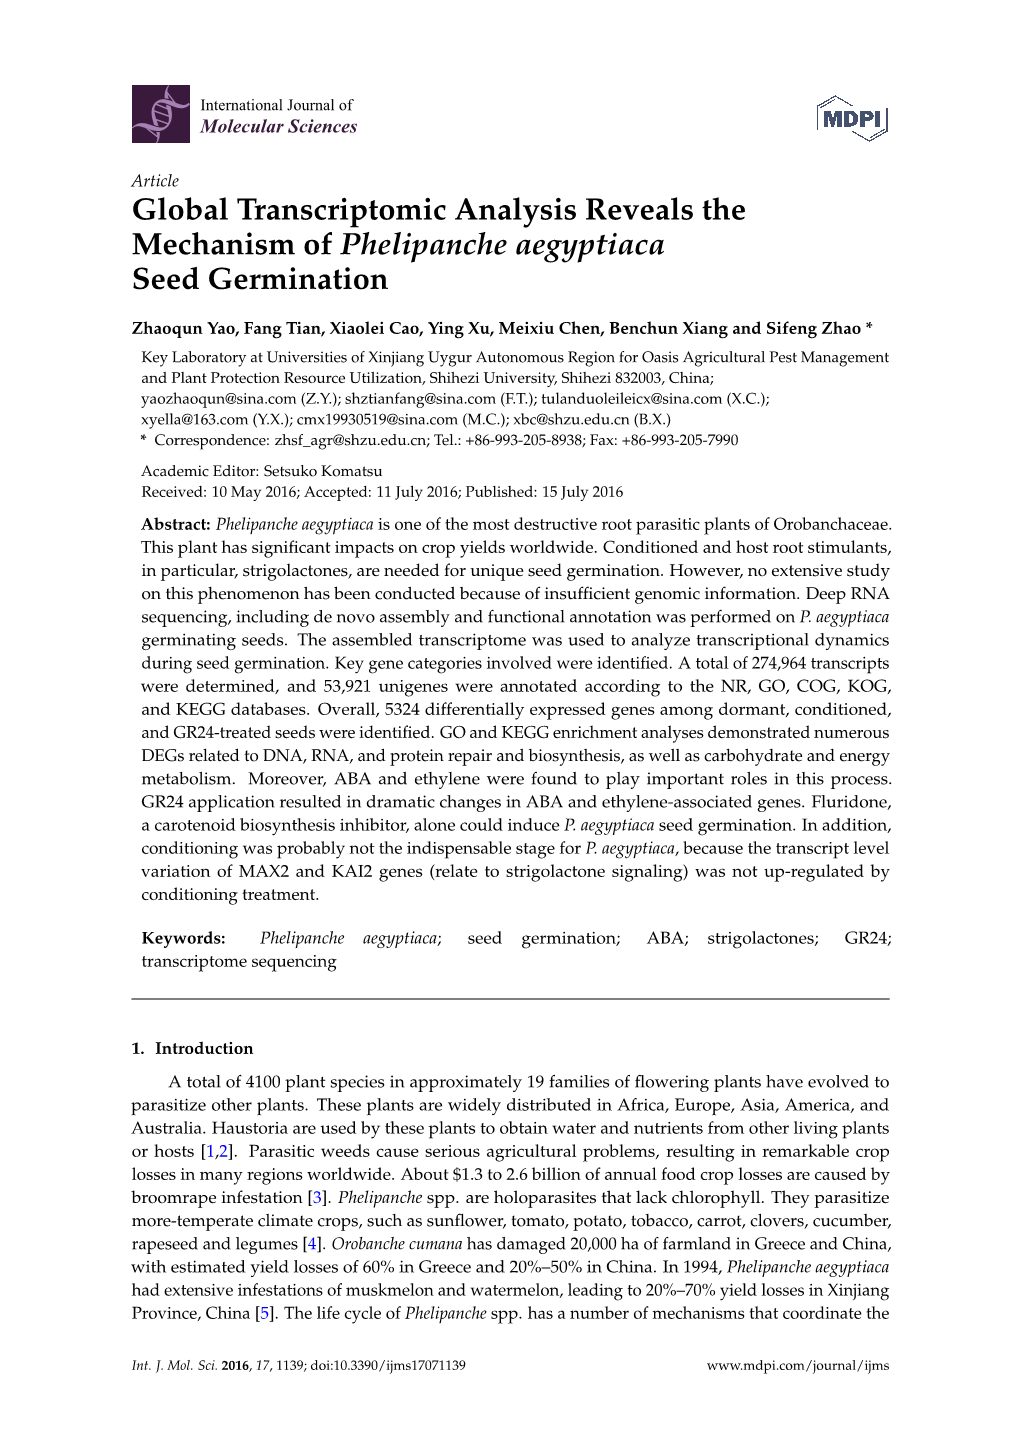 Global Transcriptomic Analysis Reveals the Mechanism of Phelipanche Aegyptiaca Seed Germination